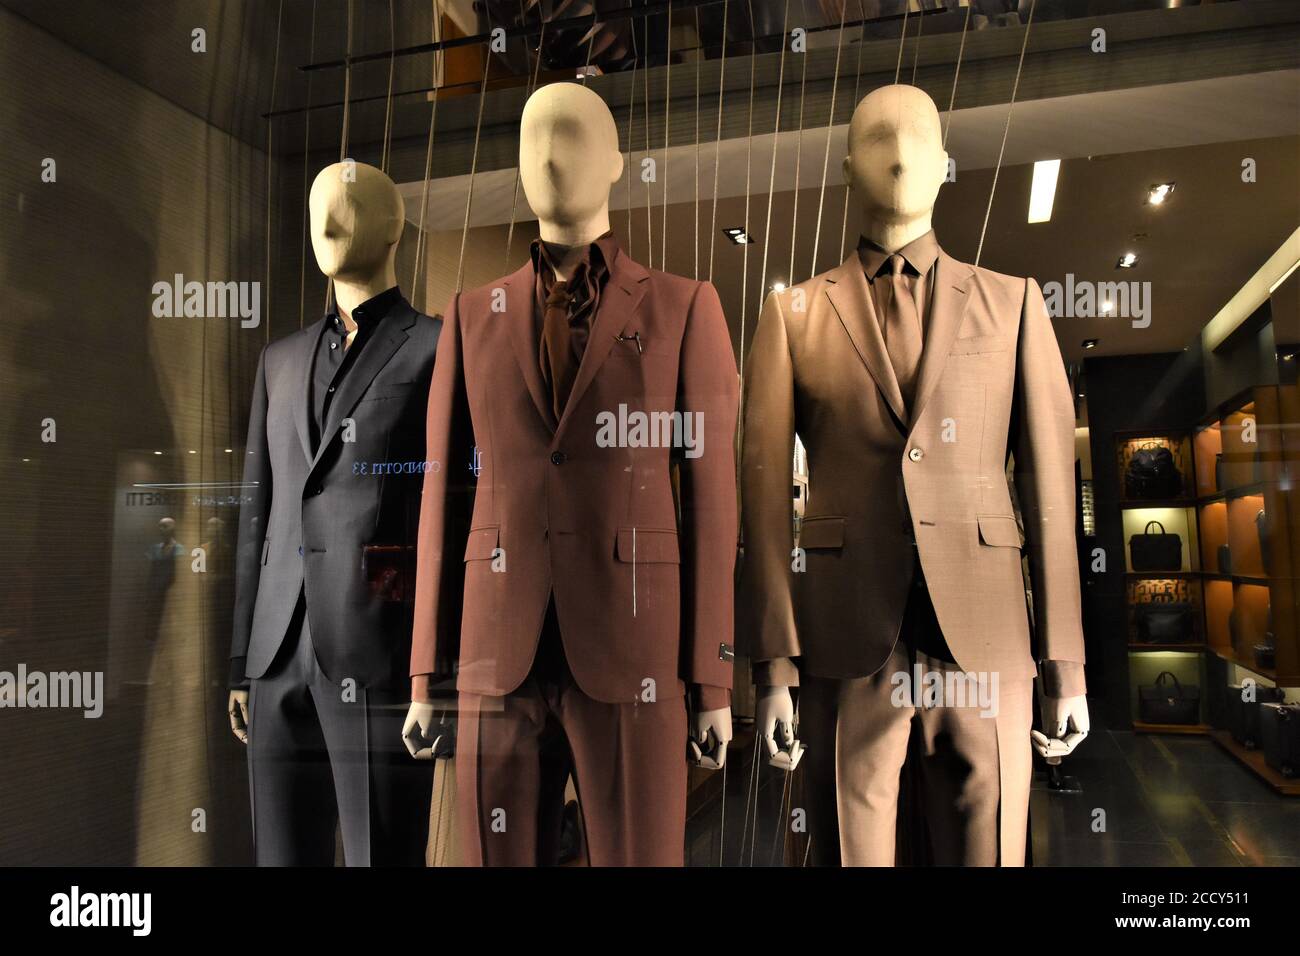 CLOTHES ON DISPLAY AT ERMENEGILDO ZEGNA BOUTIQUE IN CONDOTTI STREET Stock  Photo - Alamy